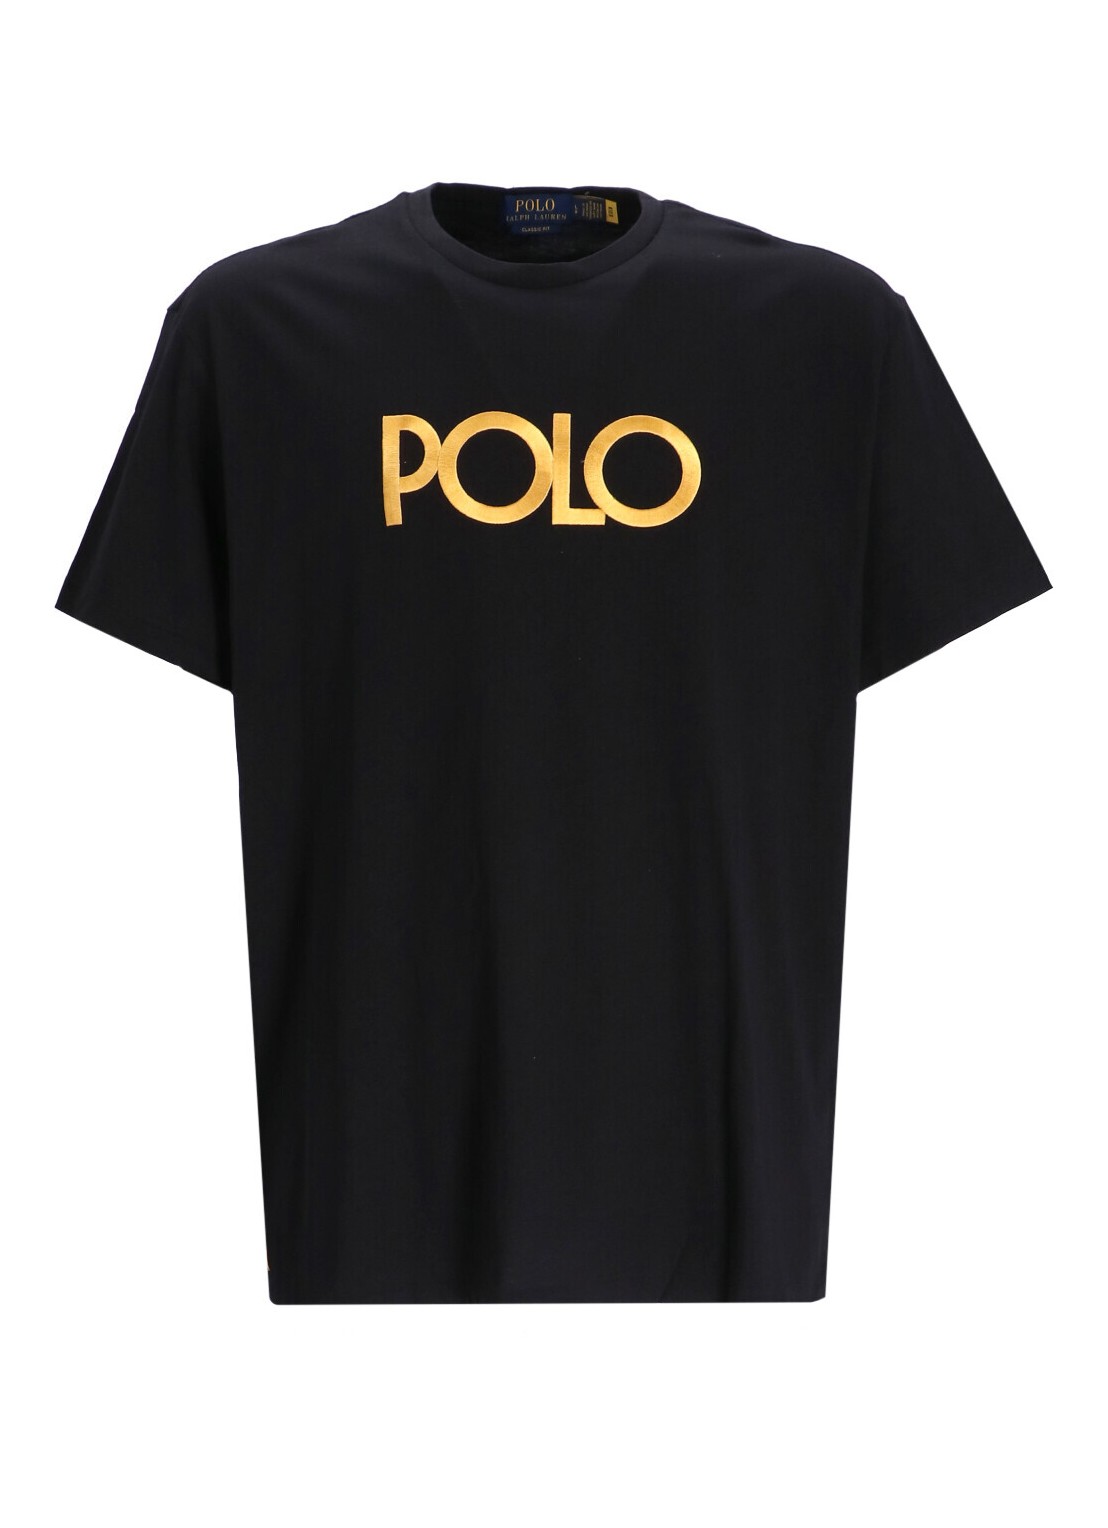 Camiseta polo ralph lauren t-shirt man sscnclsm2-short sleeve-t-shirt 710920207001 polo black talla 